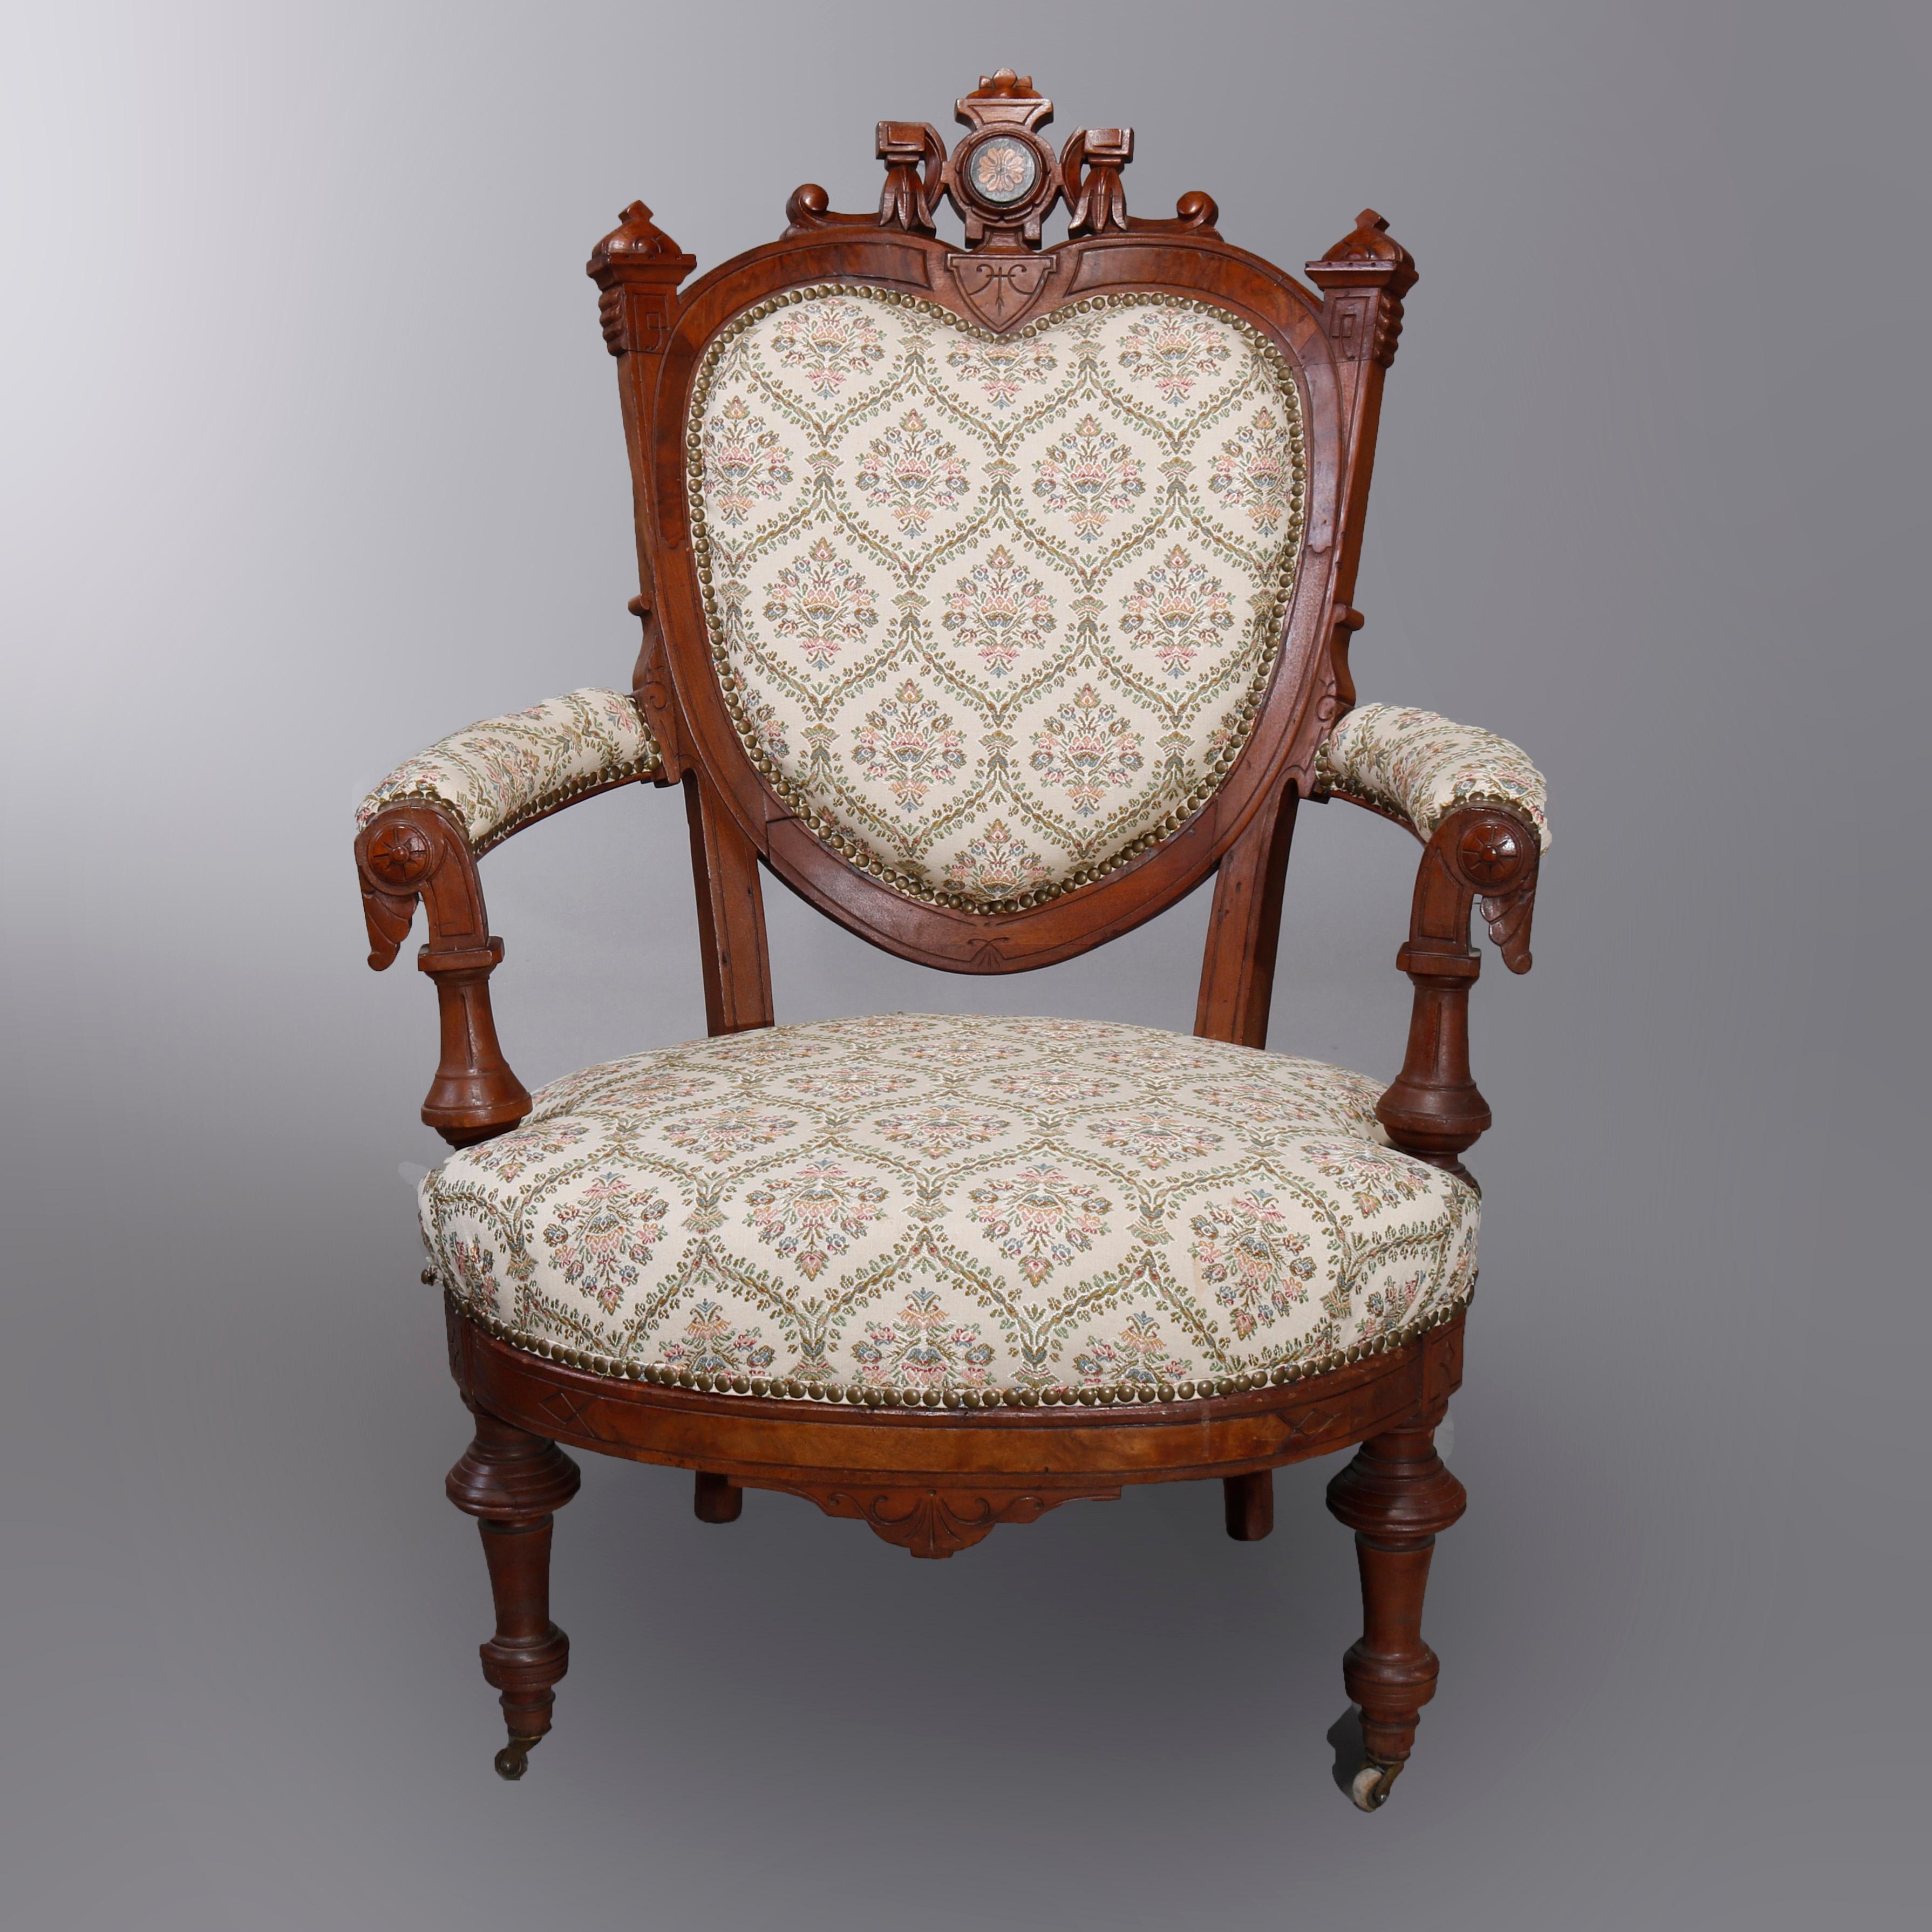 Antique Renaissance Revival Walnut & Burl Parlor Armchairs with Marquetry, c1880 For Sale 3